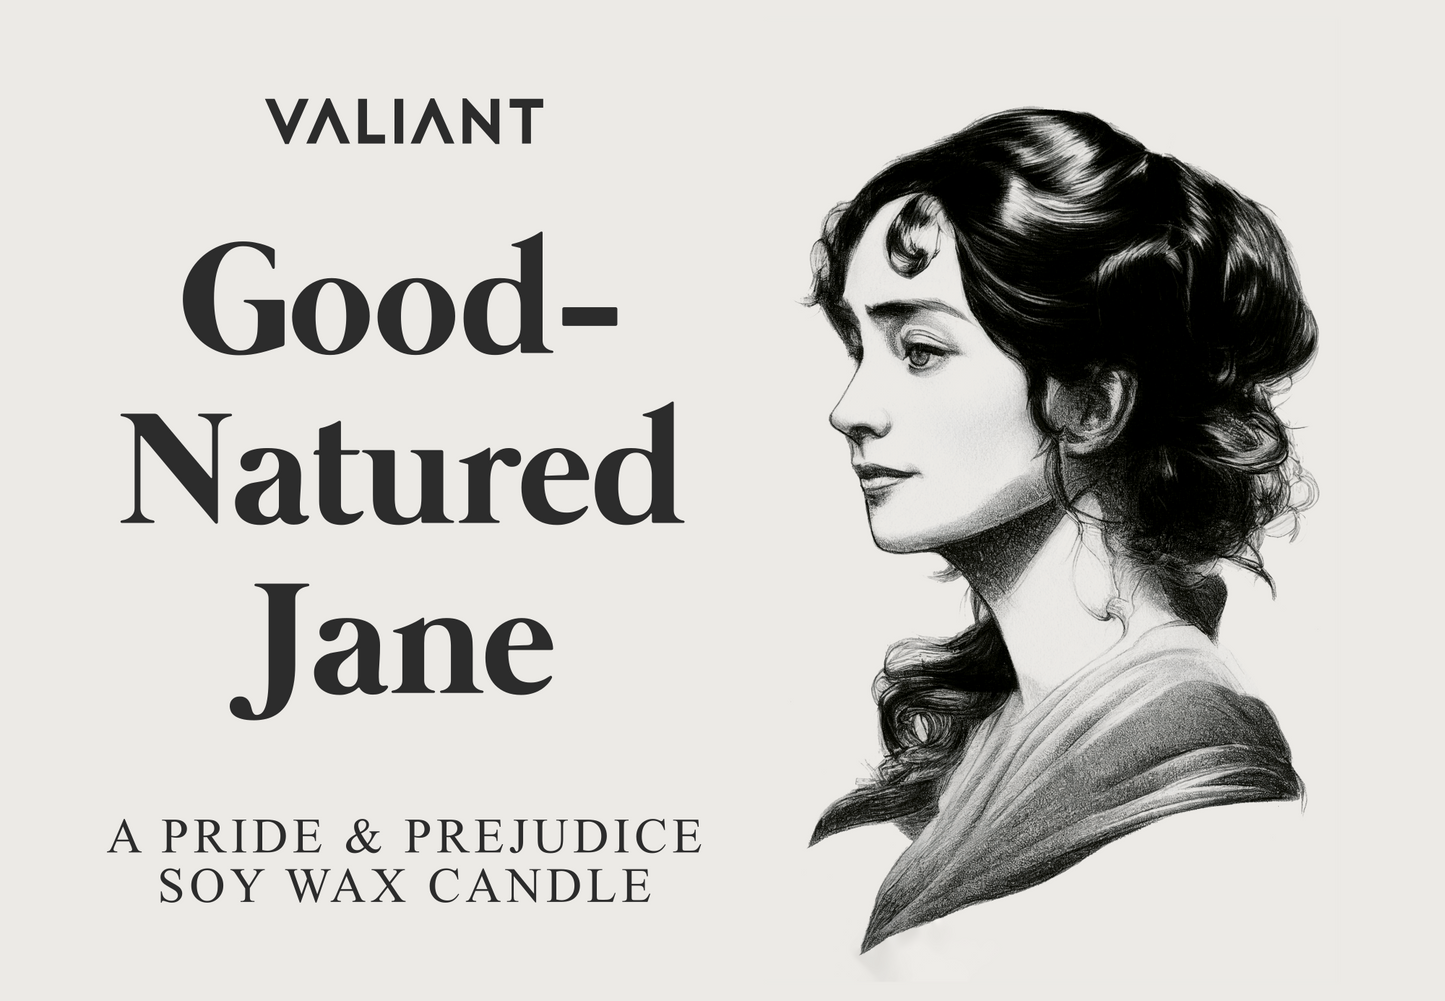 Good-Natured Jane Candle